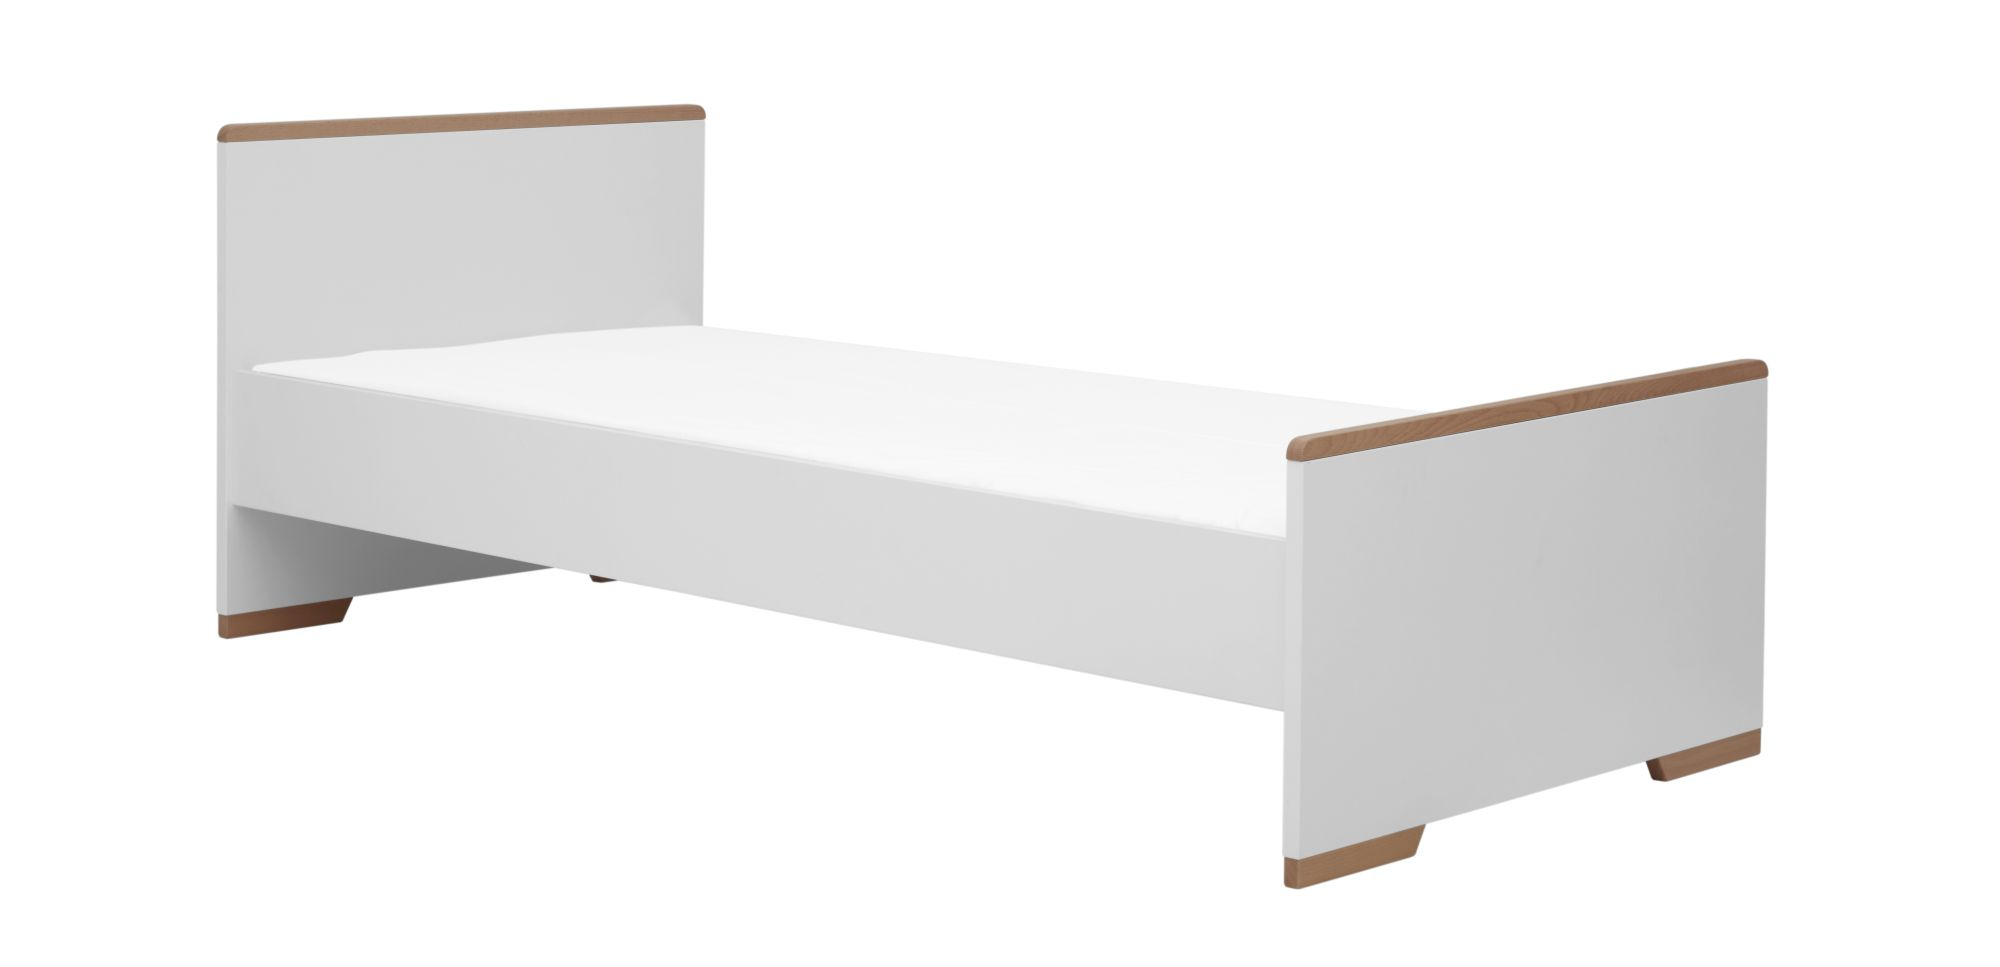 Dětská postel Snap - 200 x 90 cm (2 barvy) - Bílá, Zásuvka: Ne